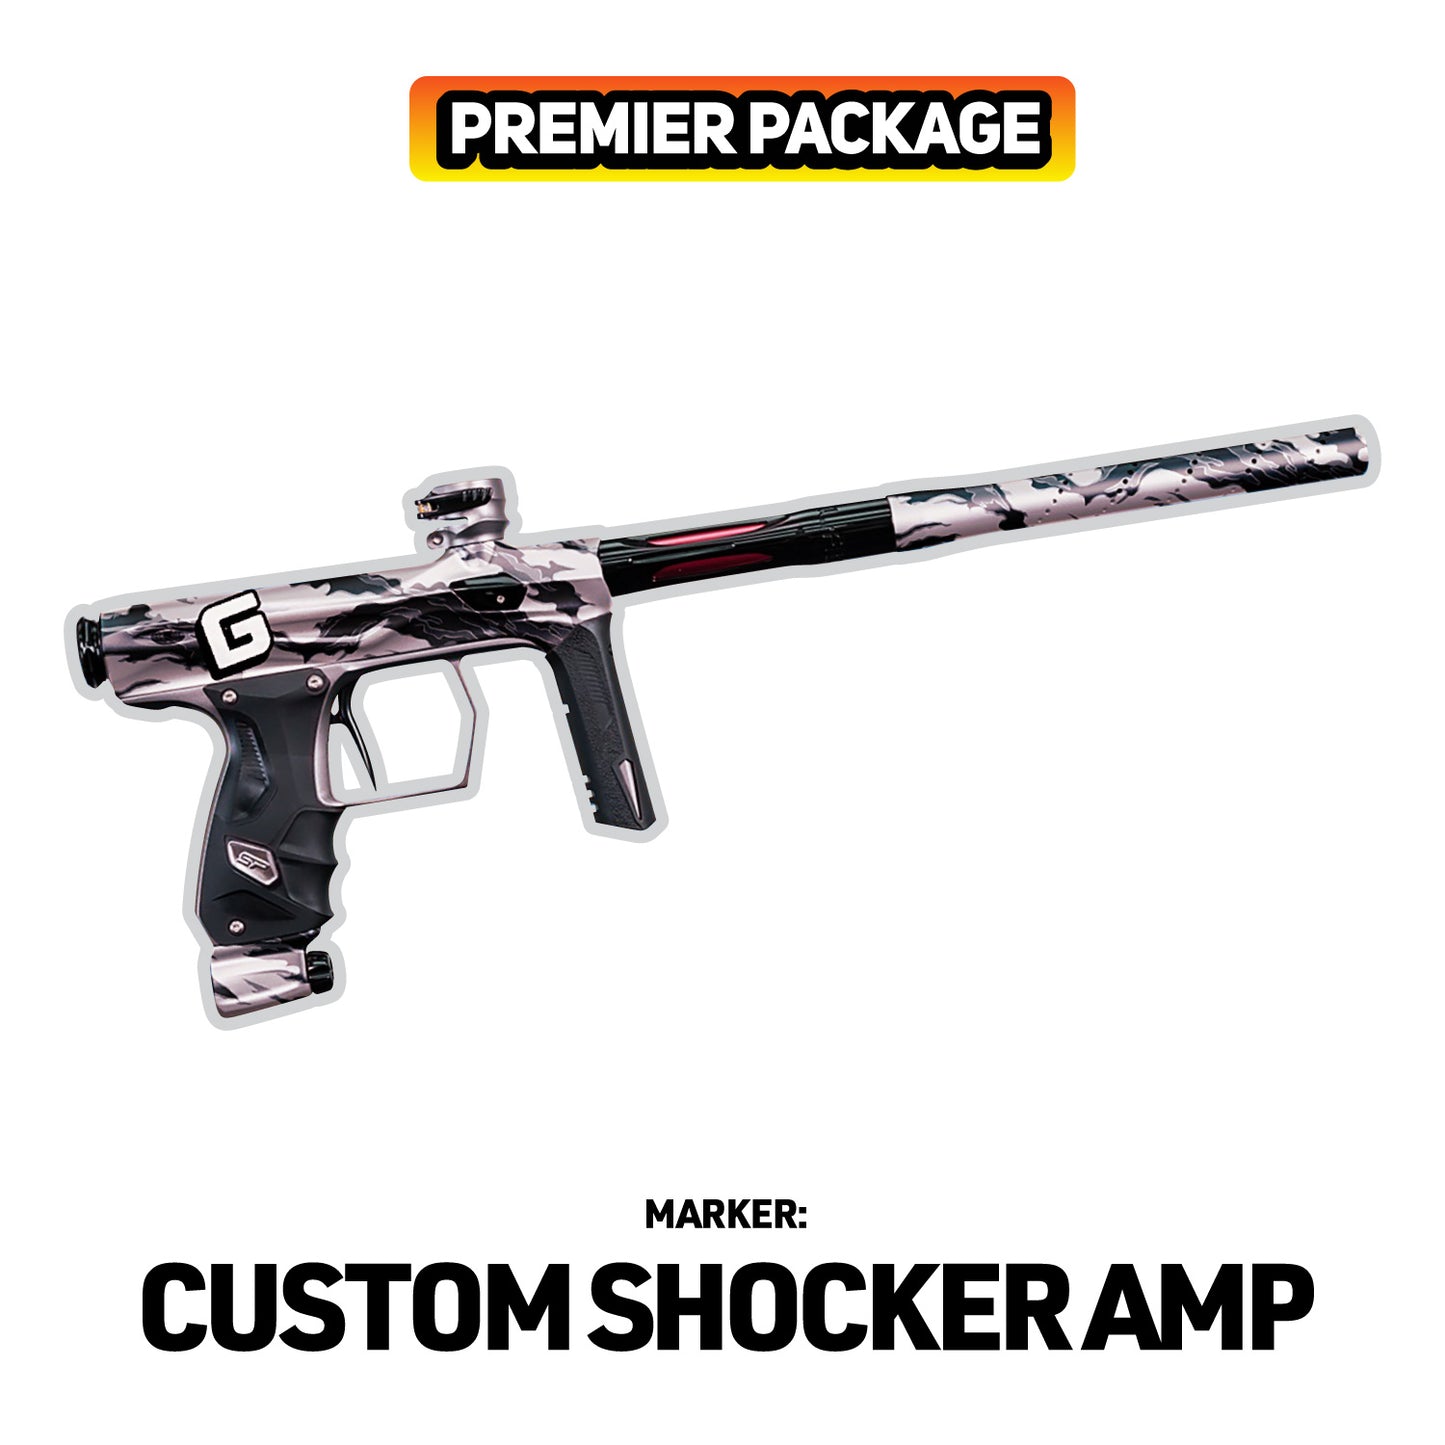 Premier Package - Shocker AMP